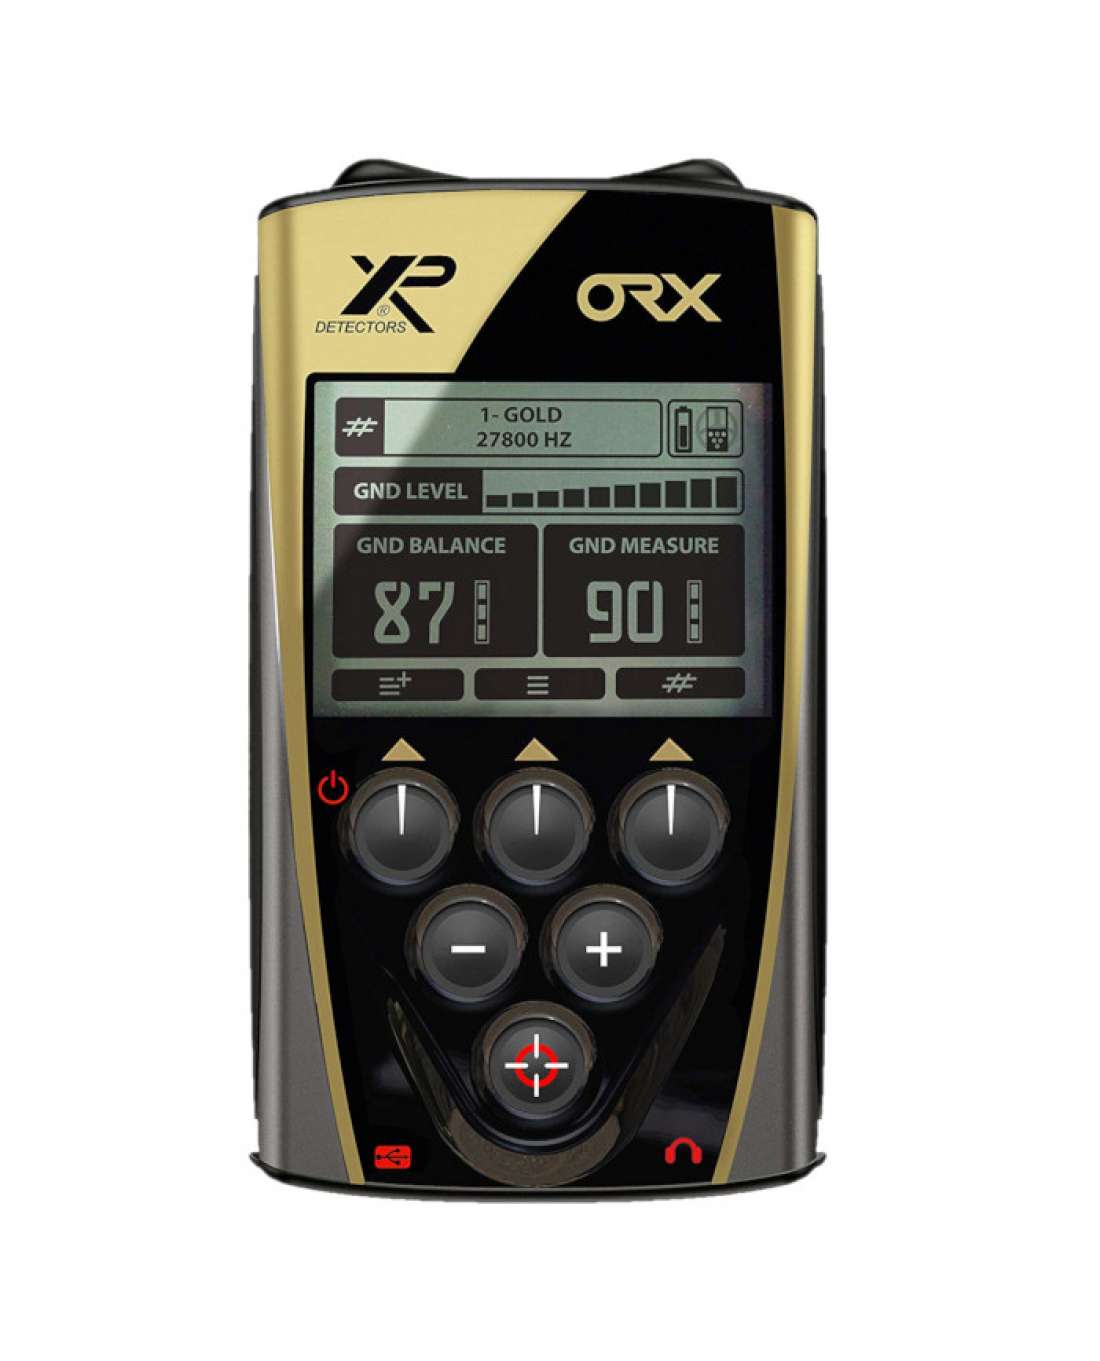 XP ORX Remote control